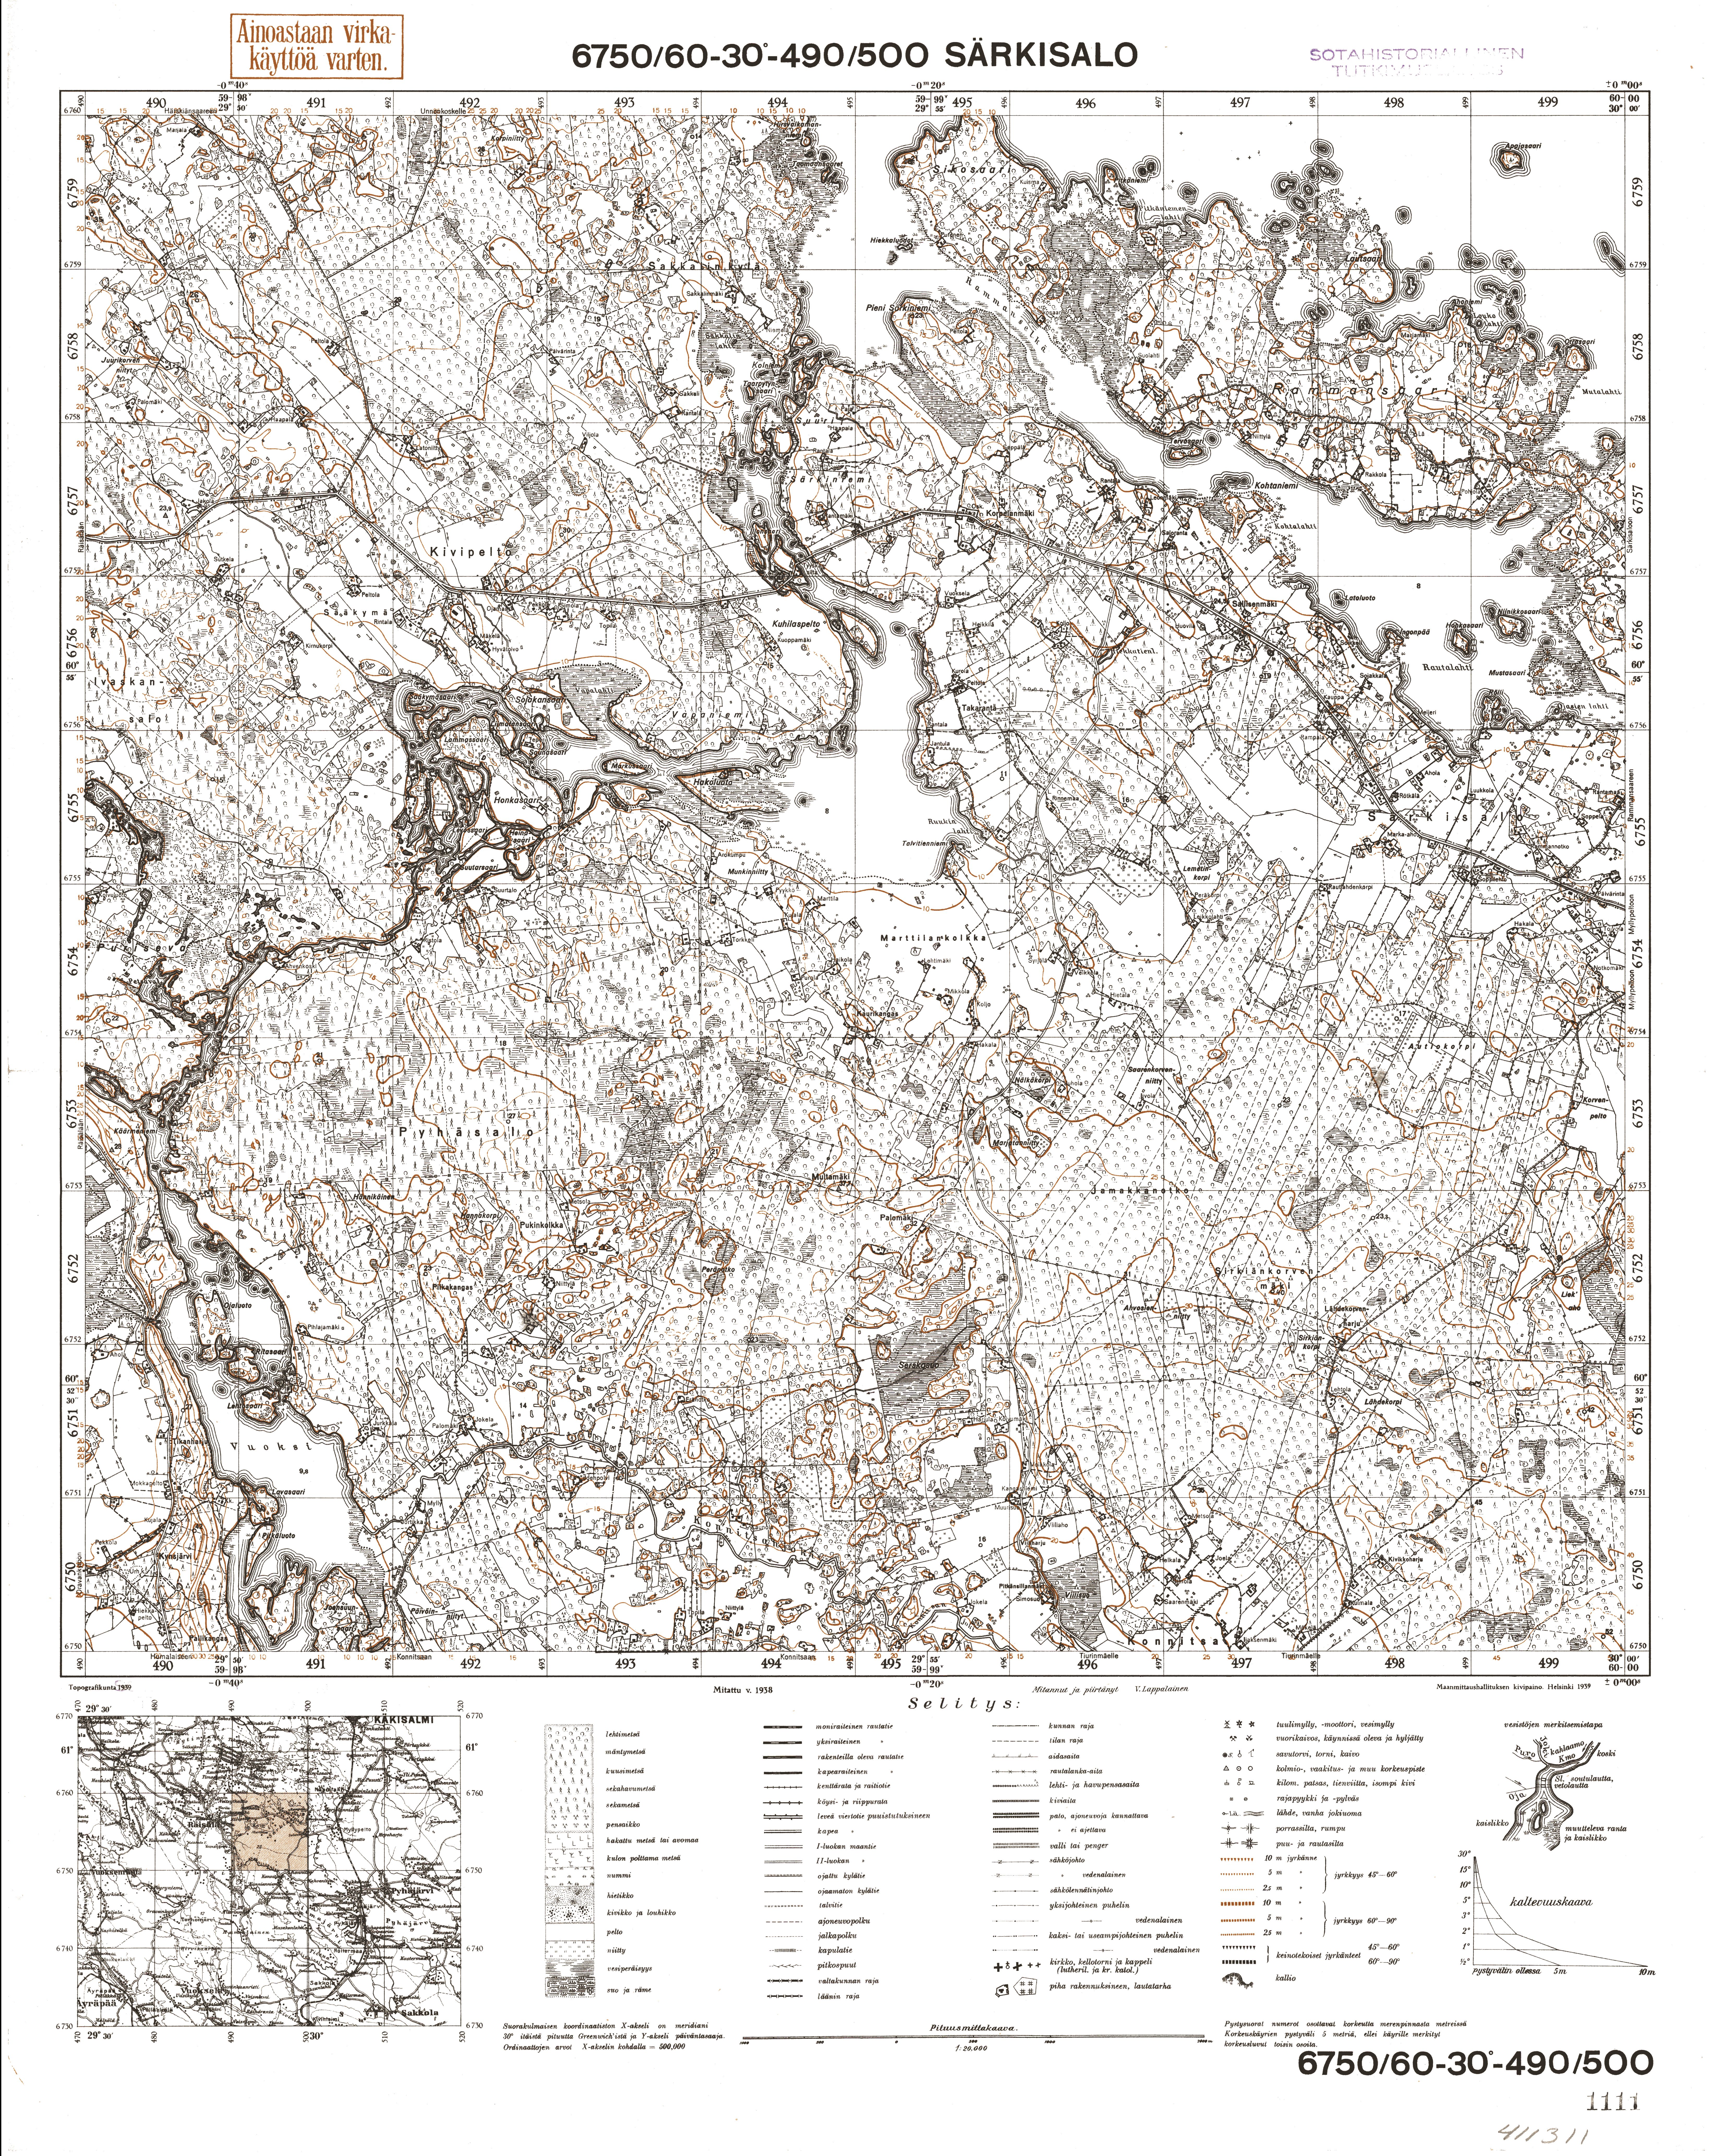 Vybonoje. Särkisalo. Topografikartta 411311. Topographic map from 1938